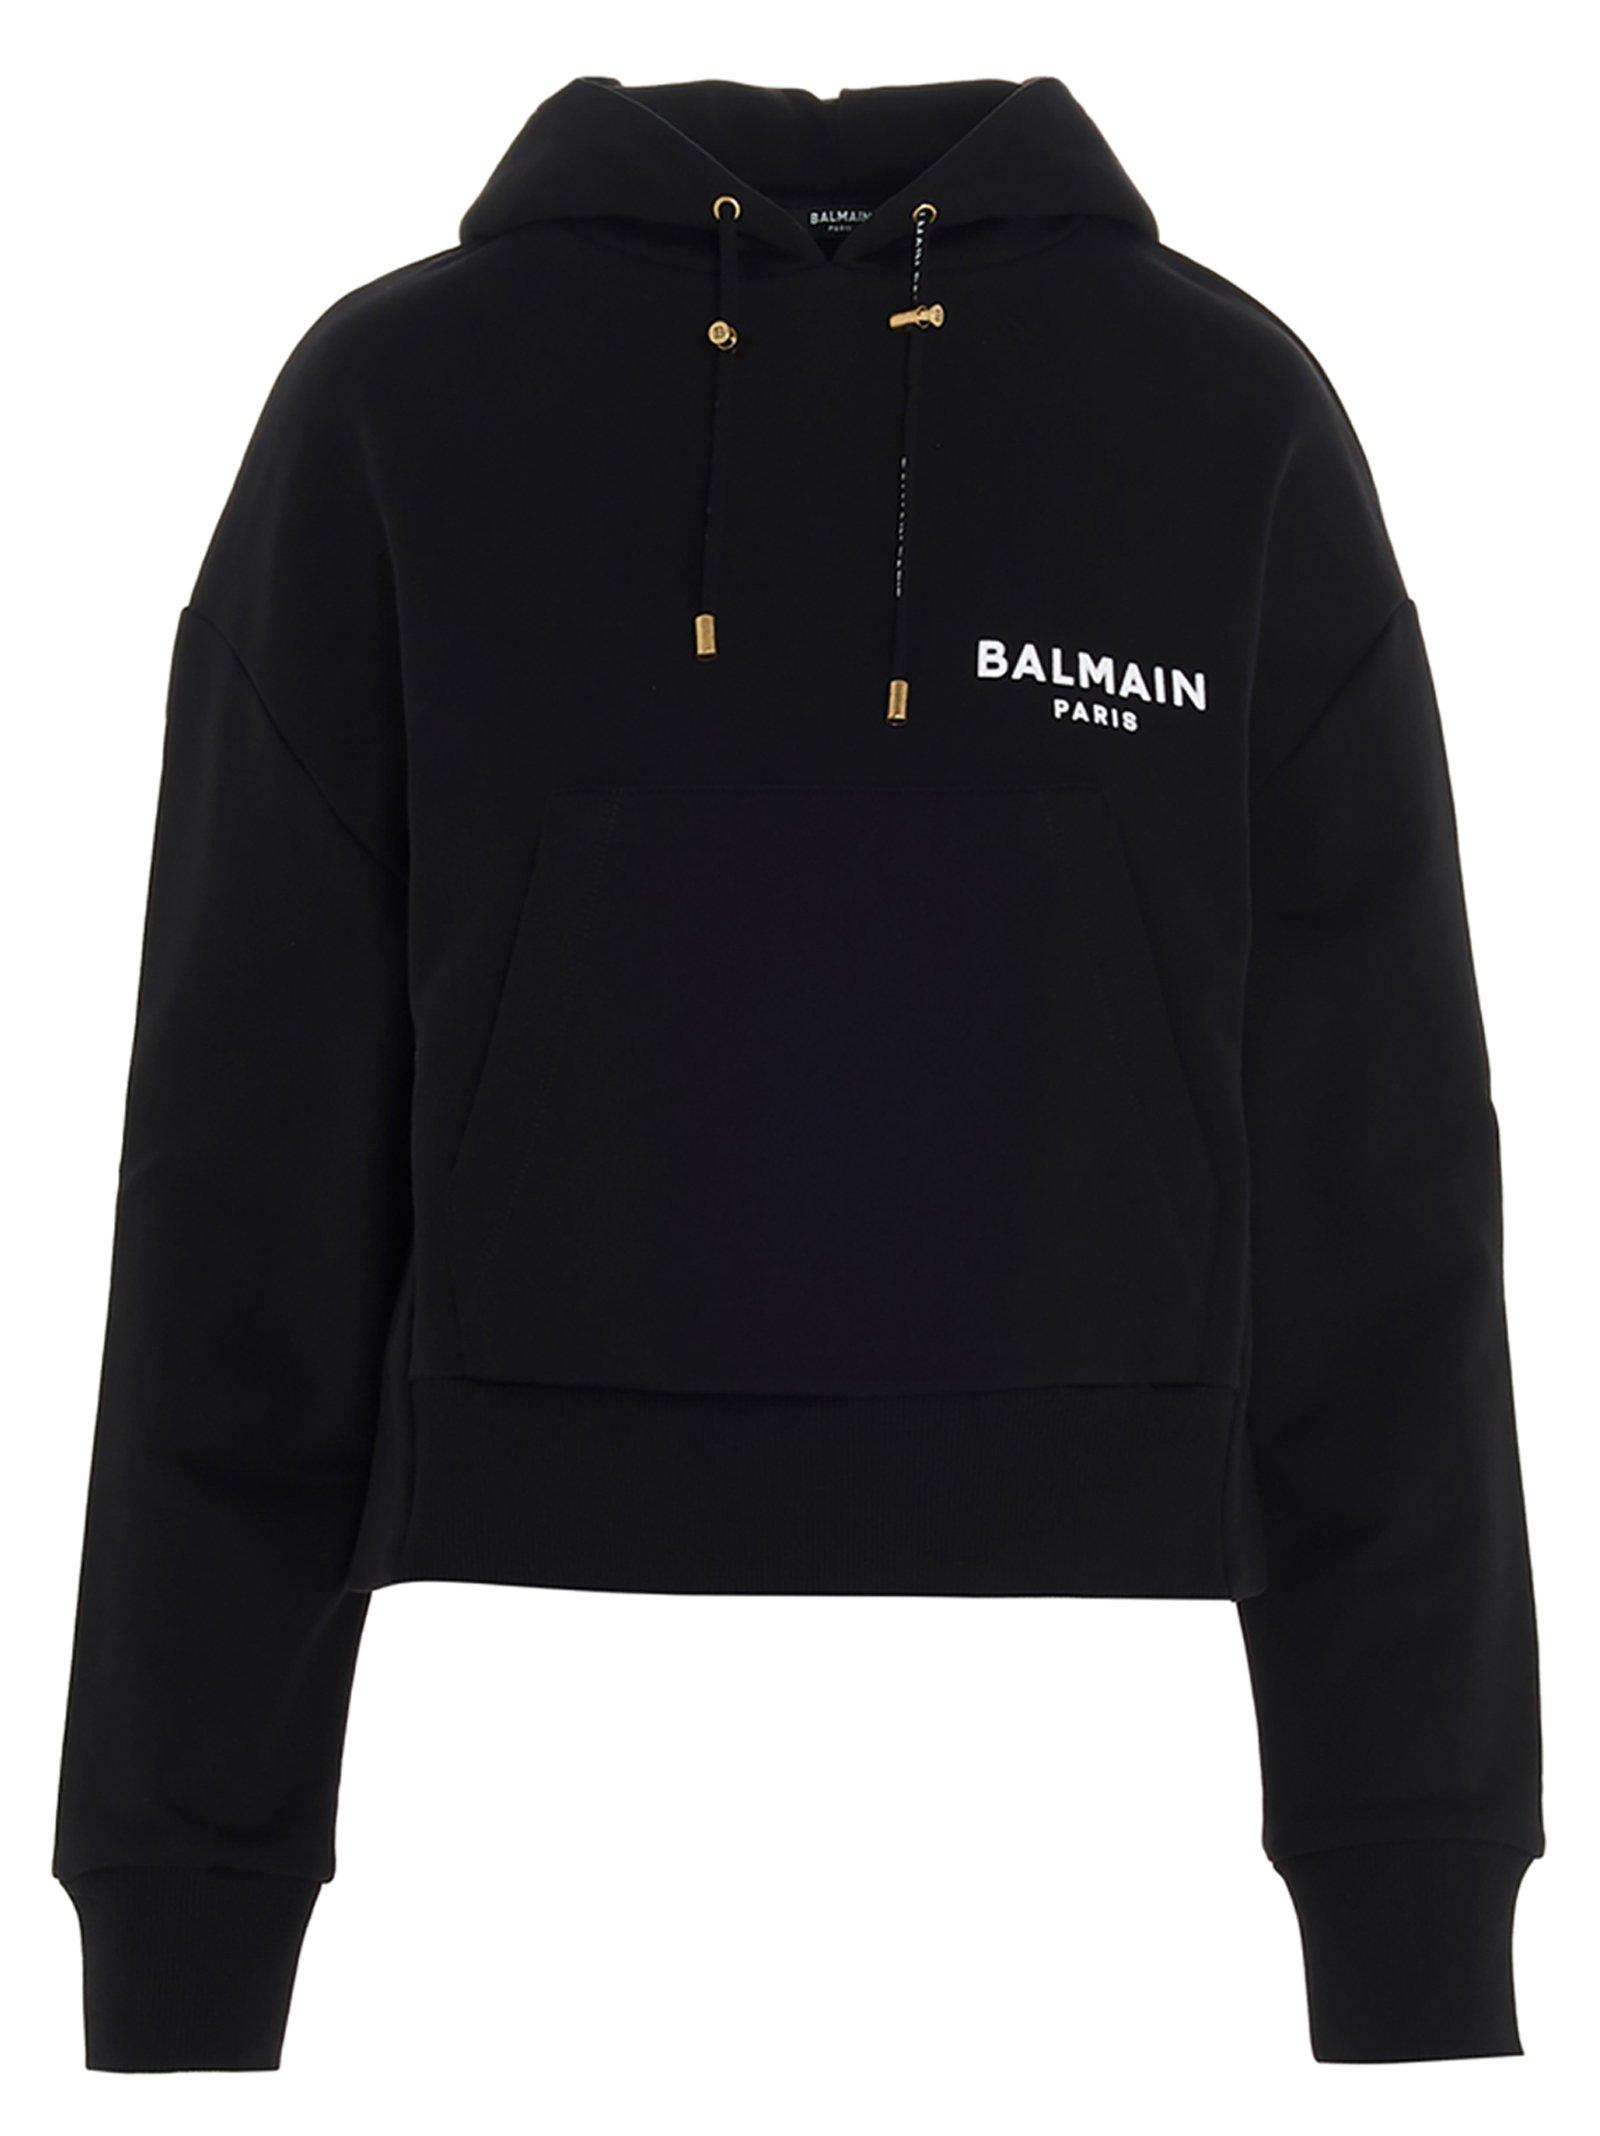 Balmain Cotton Flocked Logo Cropped Hoodie in Black - Lyst